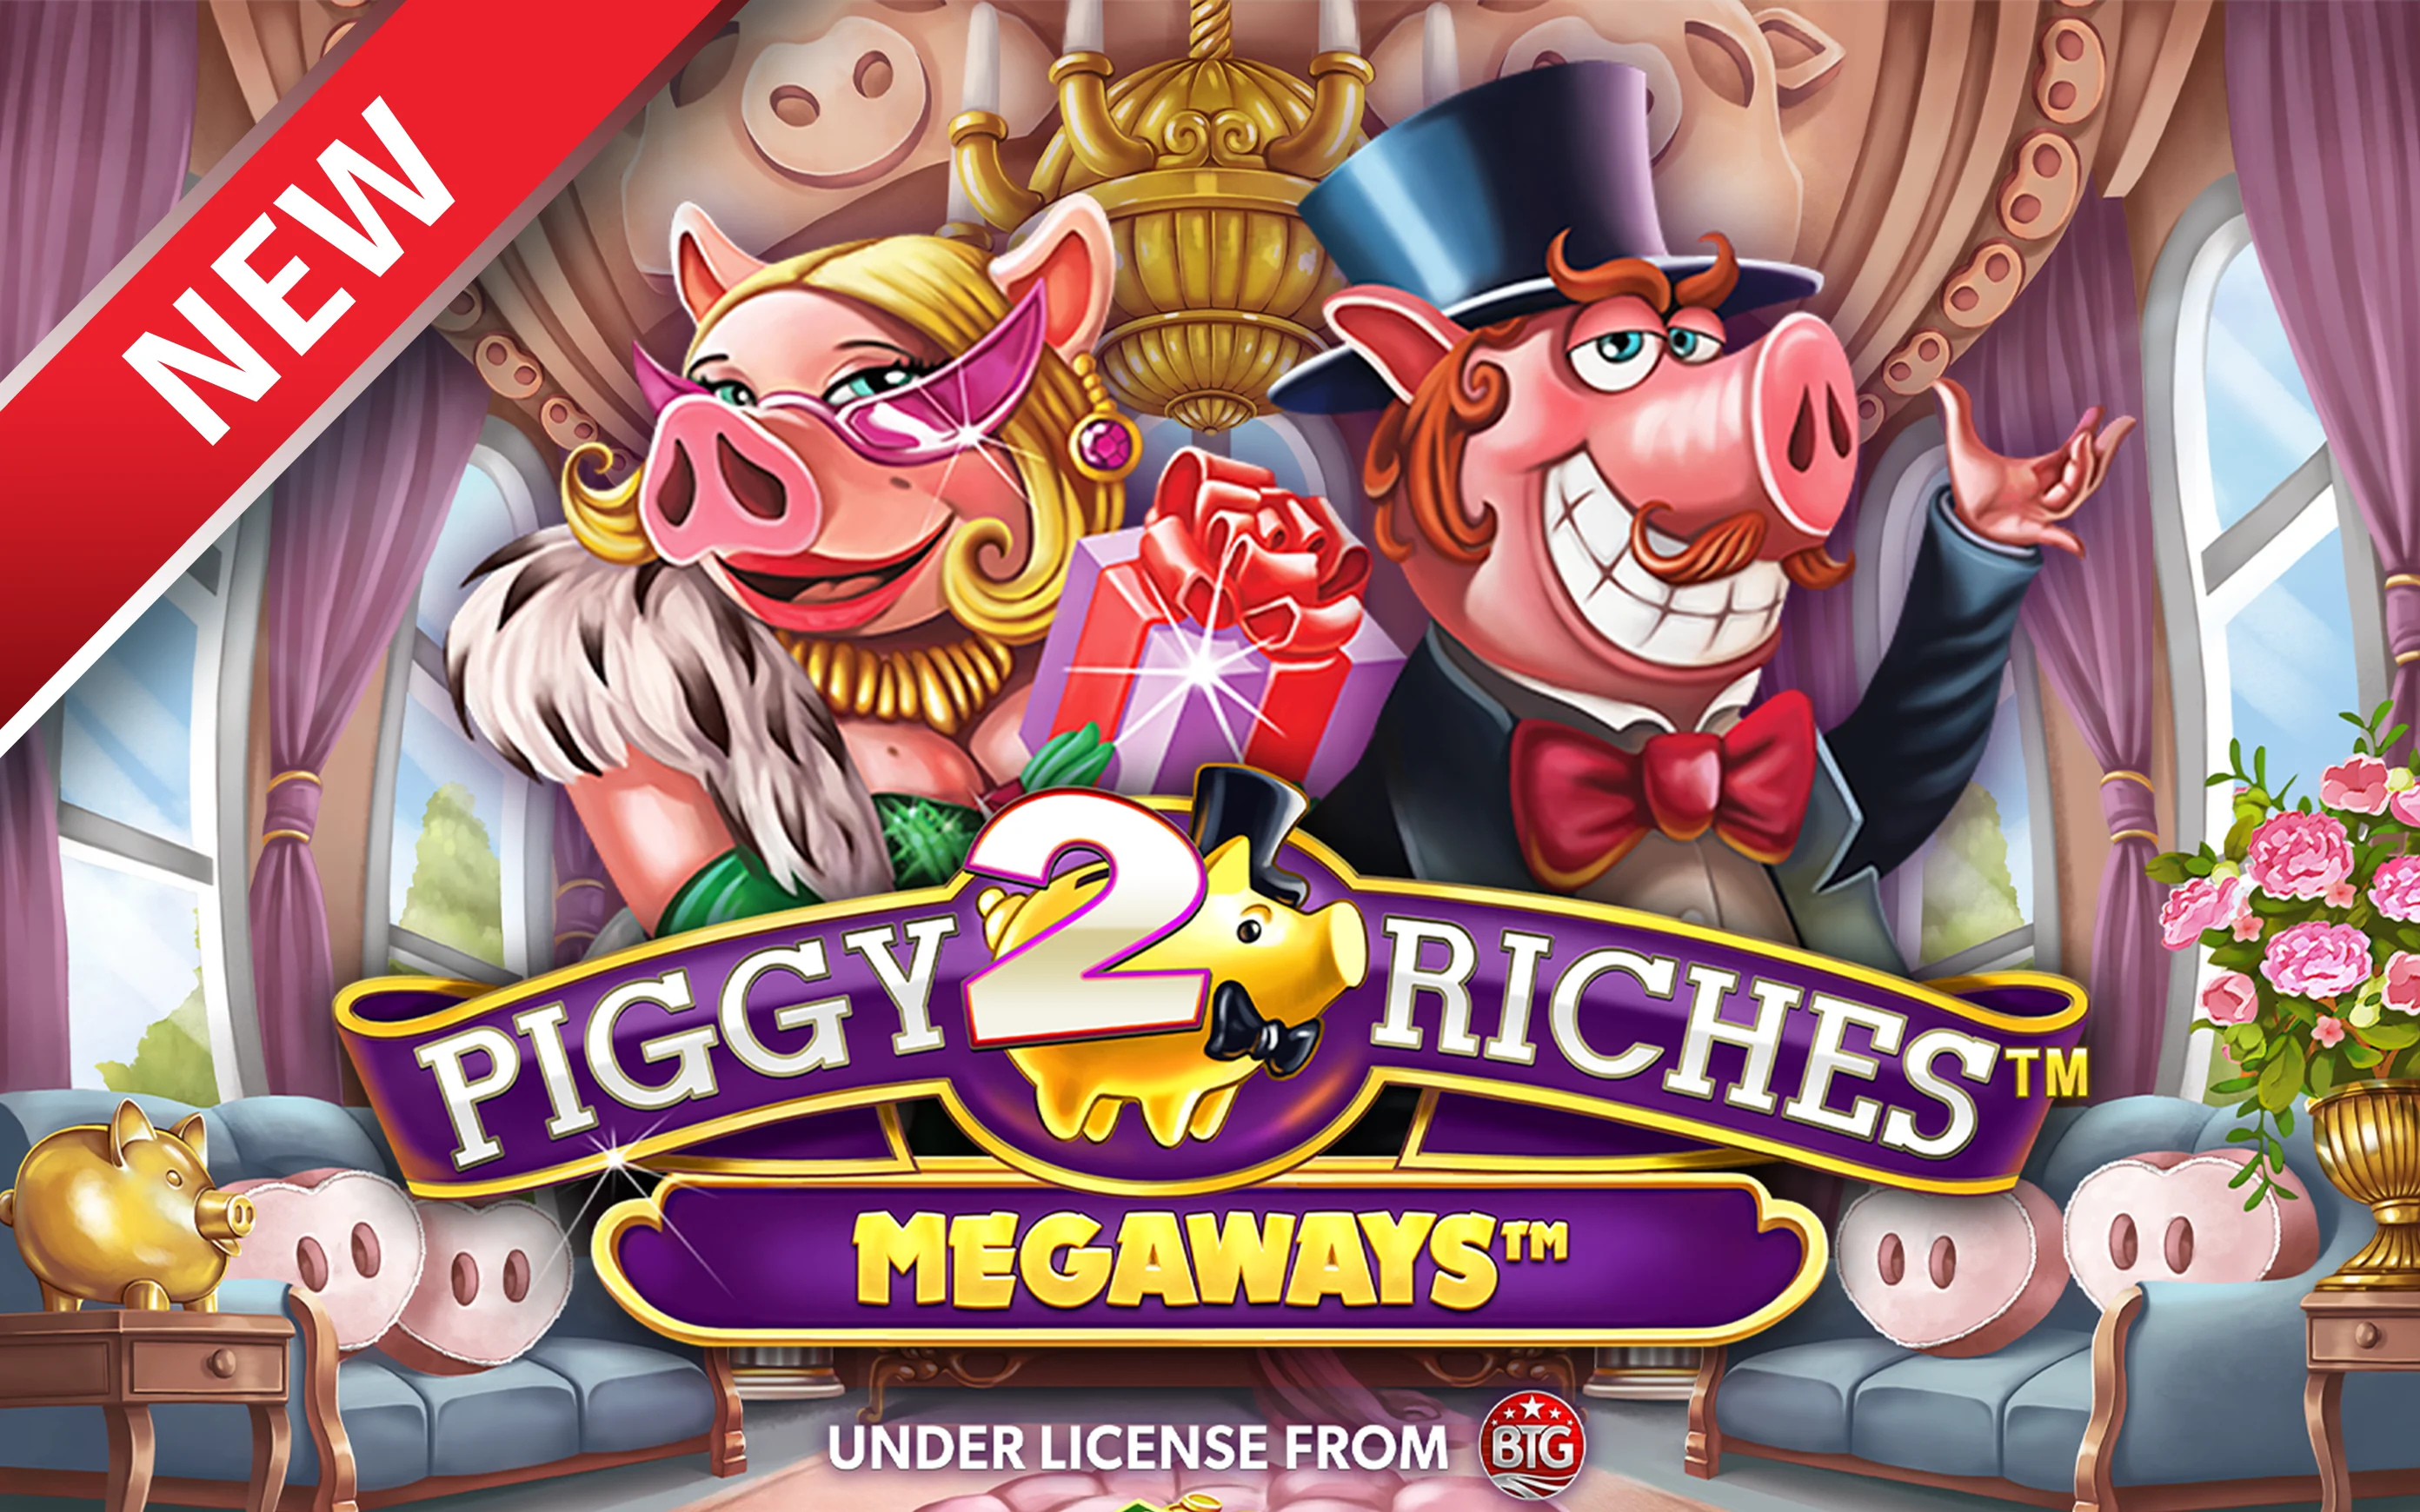 Joacă Piggy Riches 2 Megaways™ în cazinoul online Starcasino.be